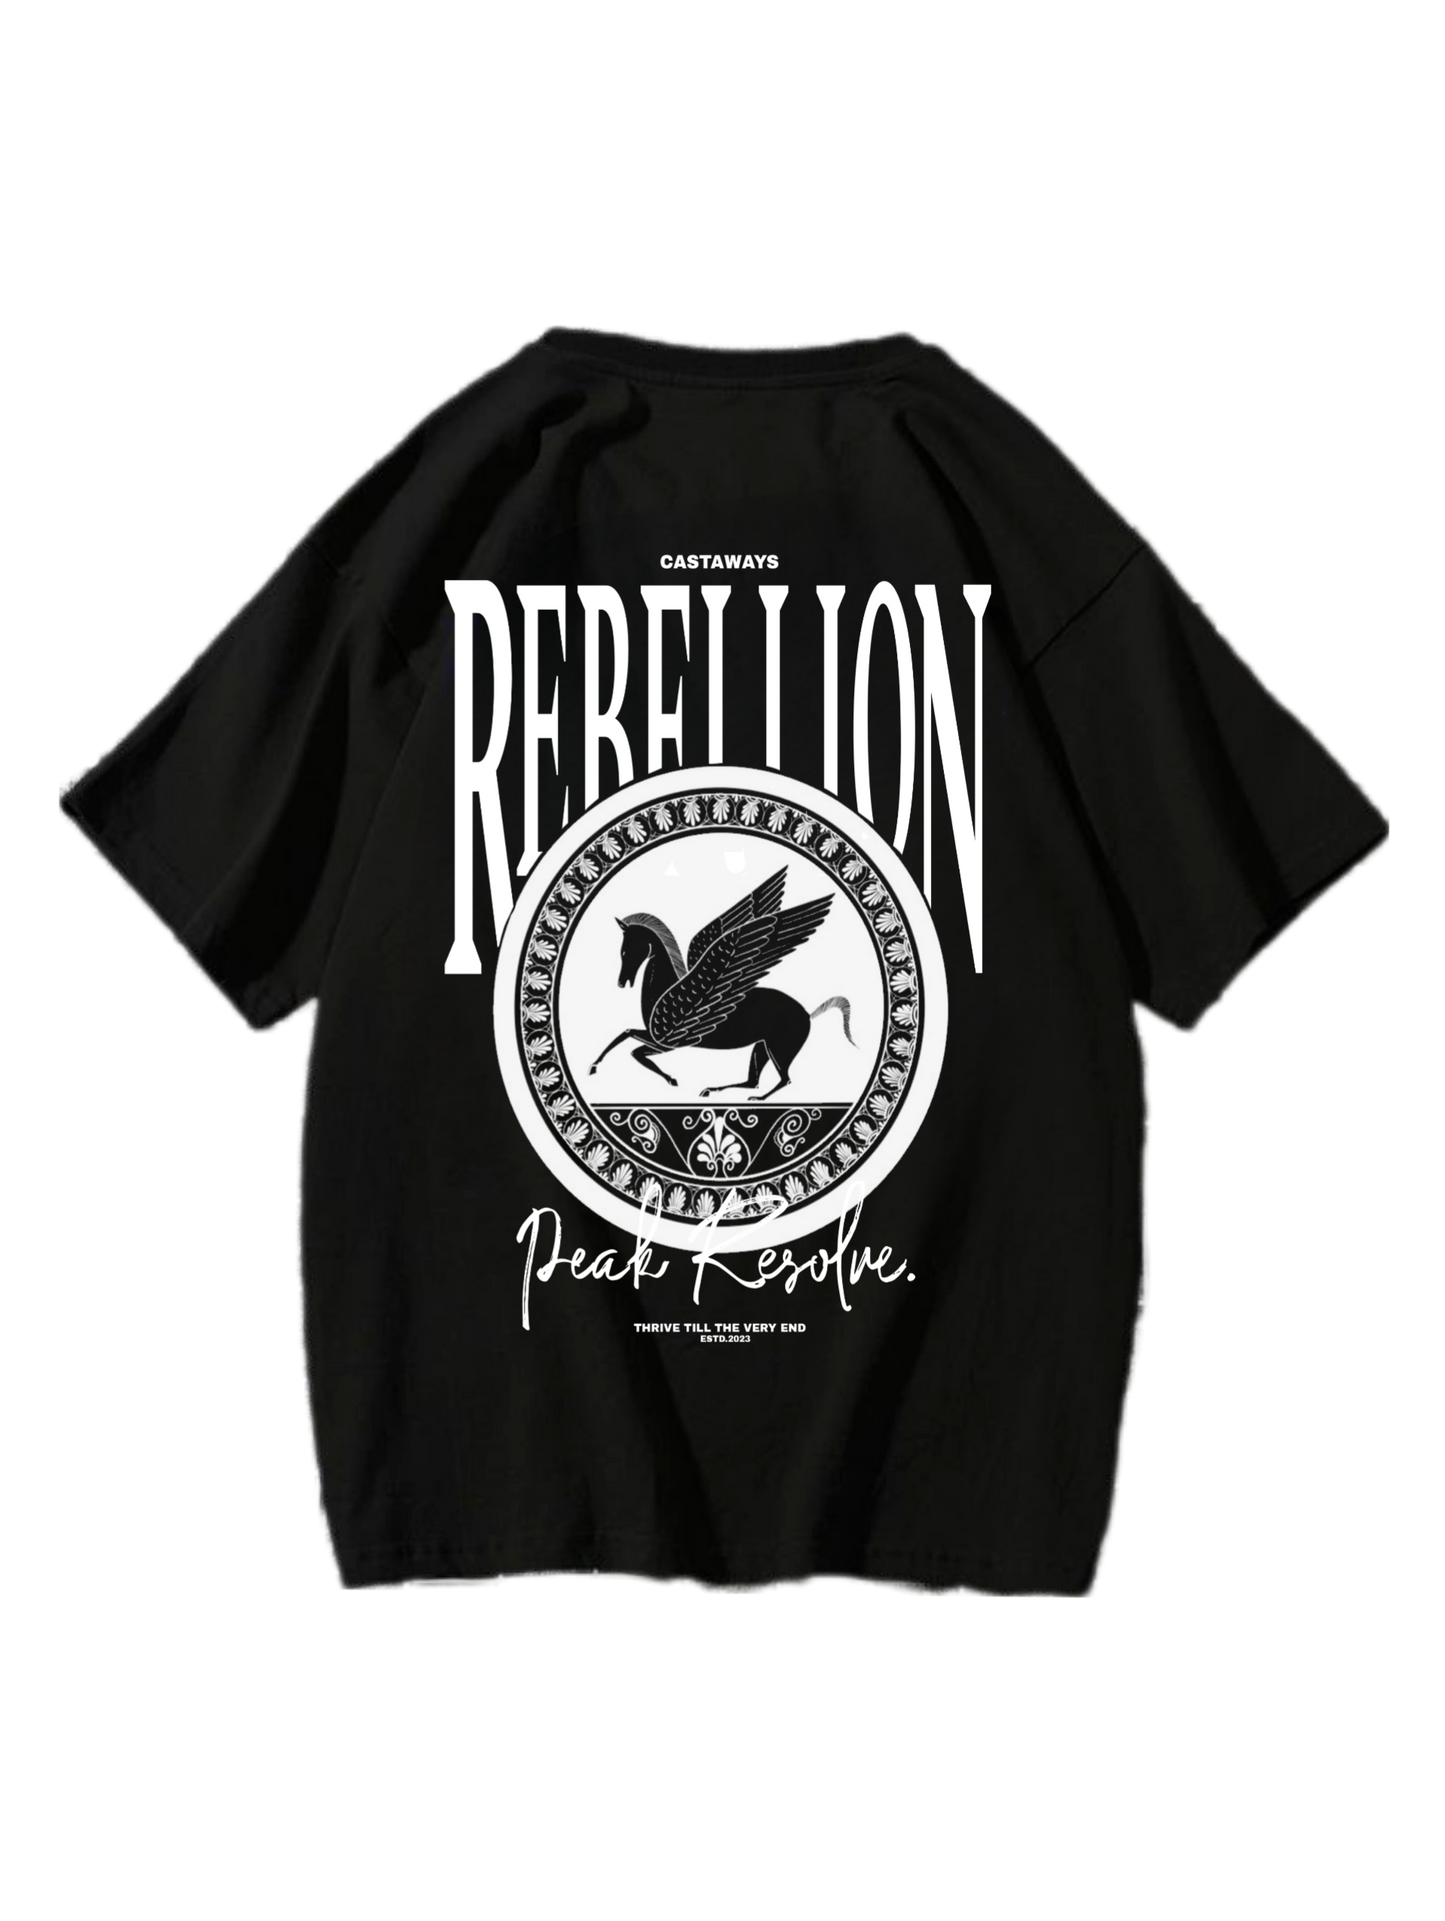 'Rebellion' graphic tee